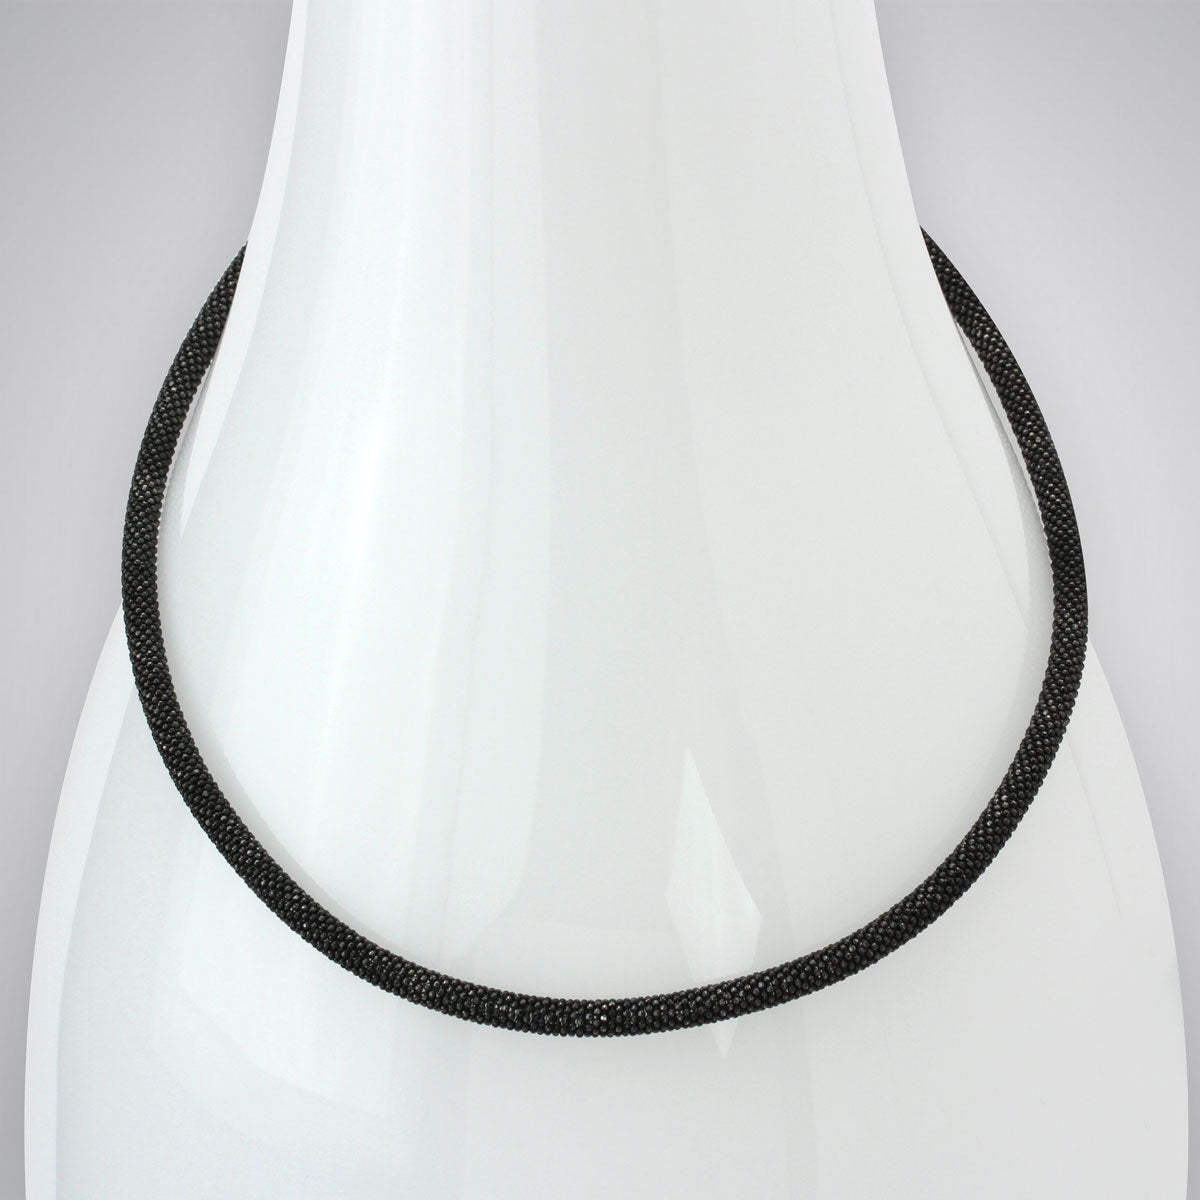 Black Necklace ONLY 4 LEFT!-340132